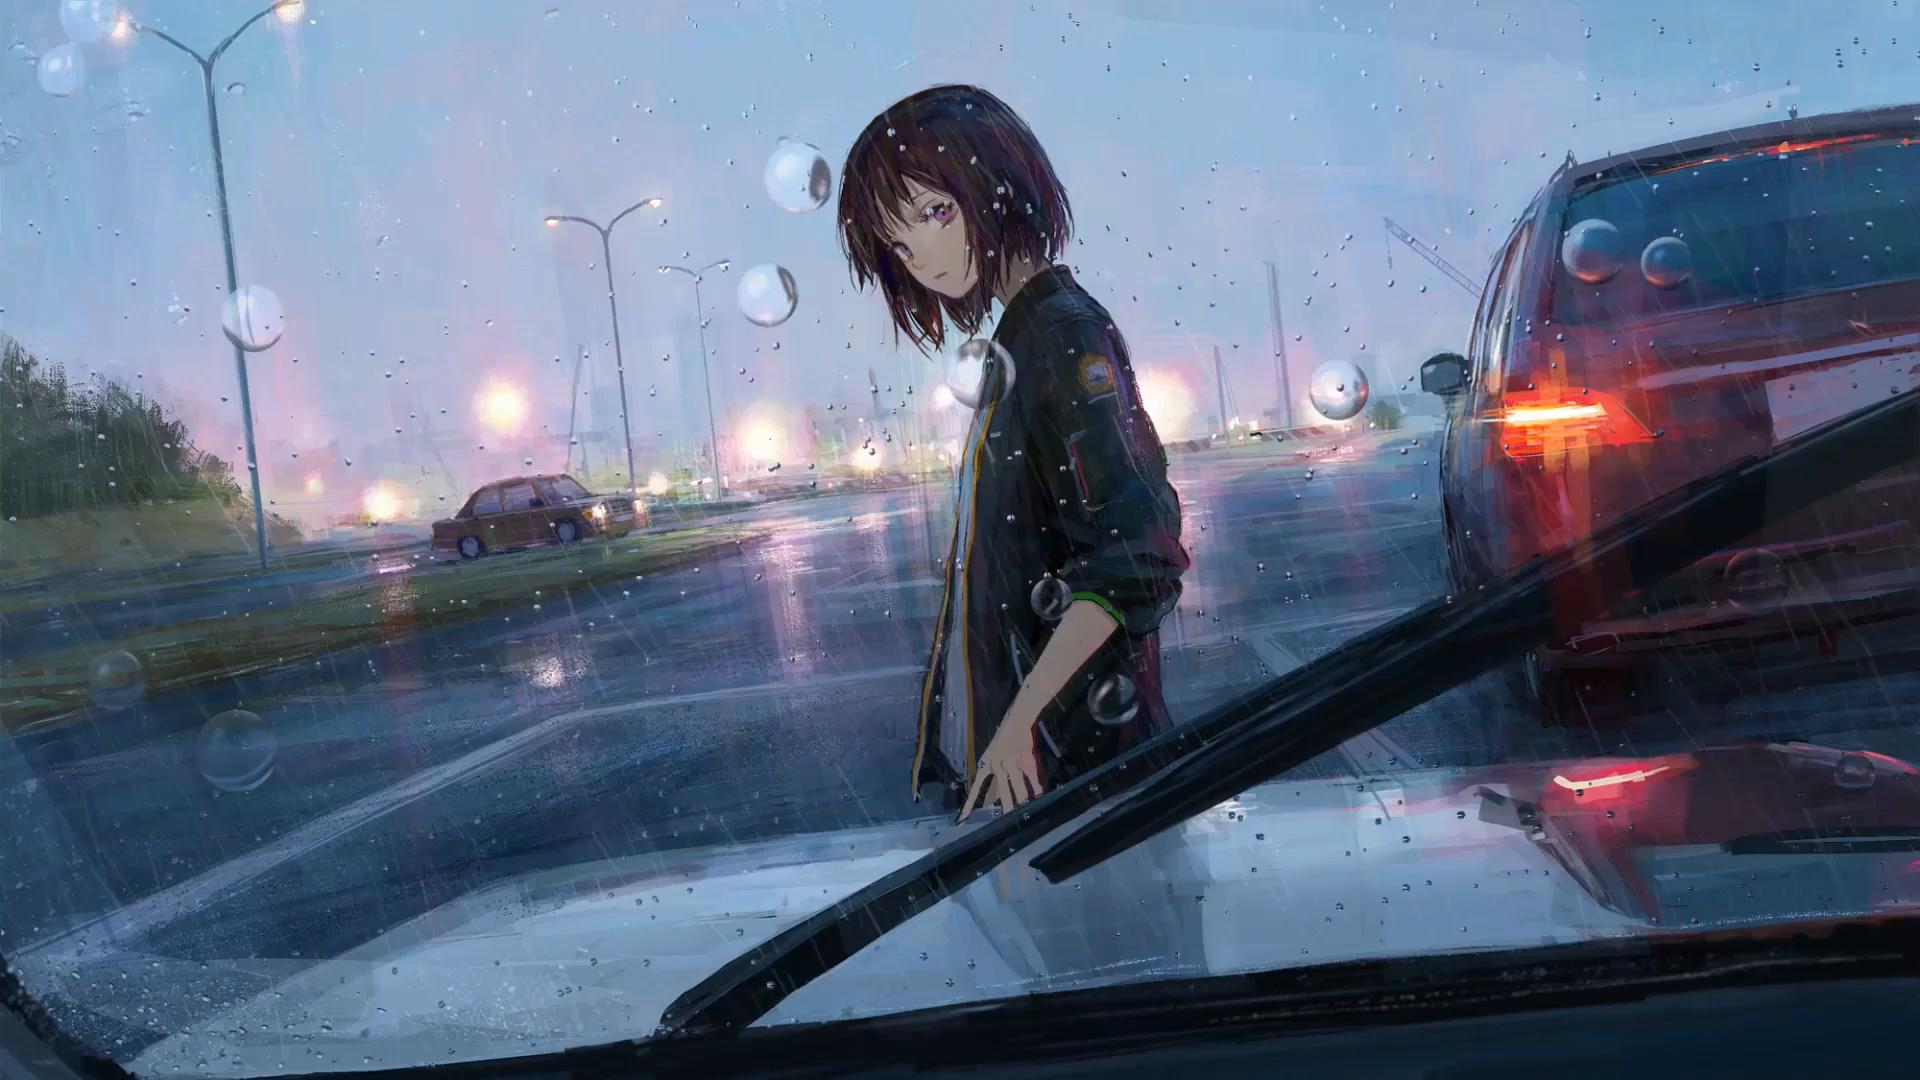 Premium AI Image | rain background illustration with anime style